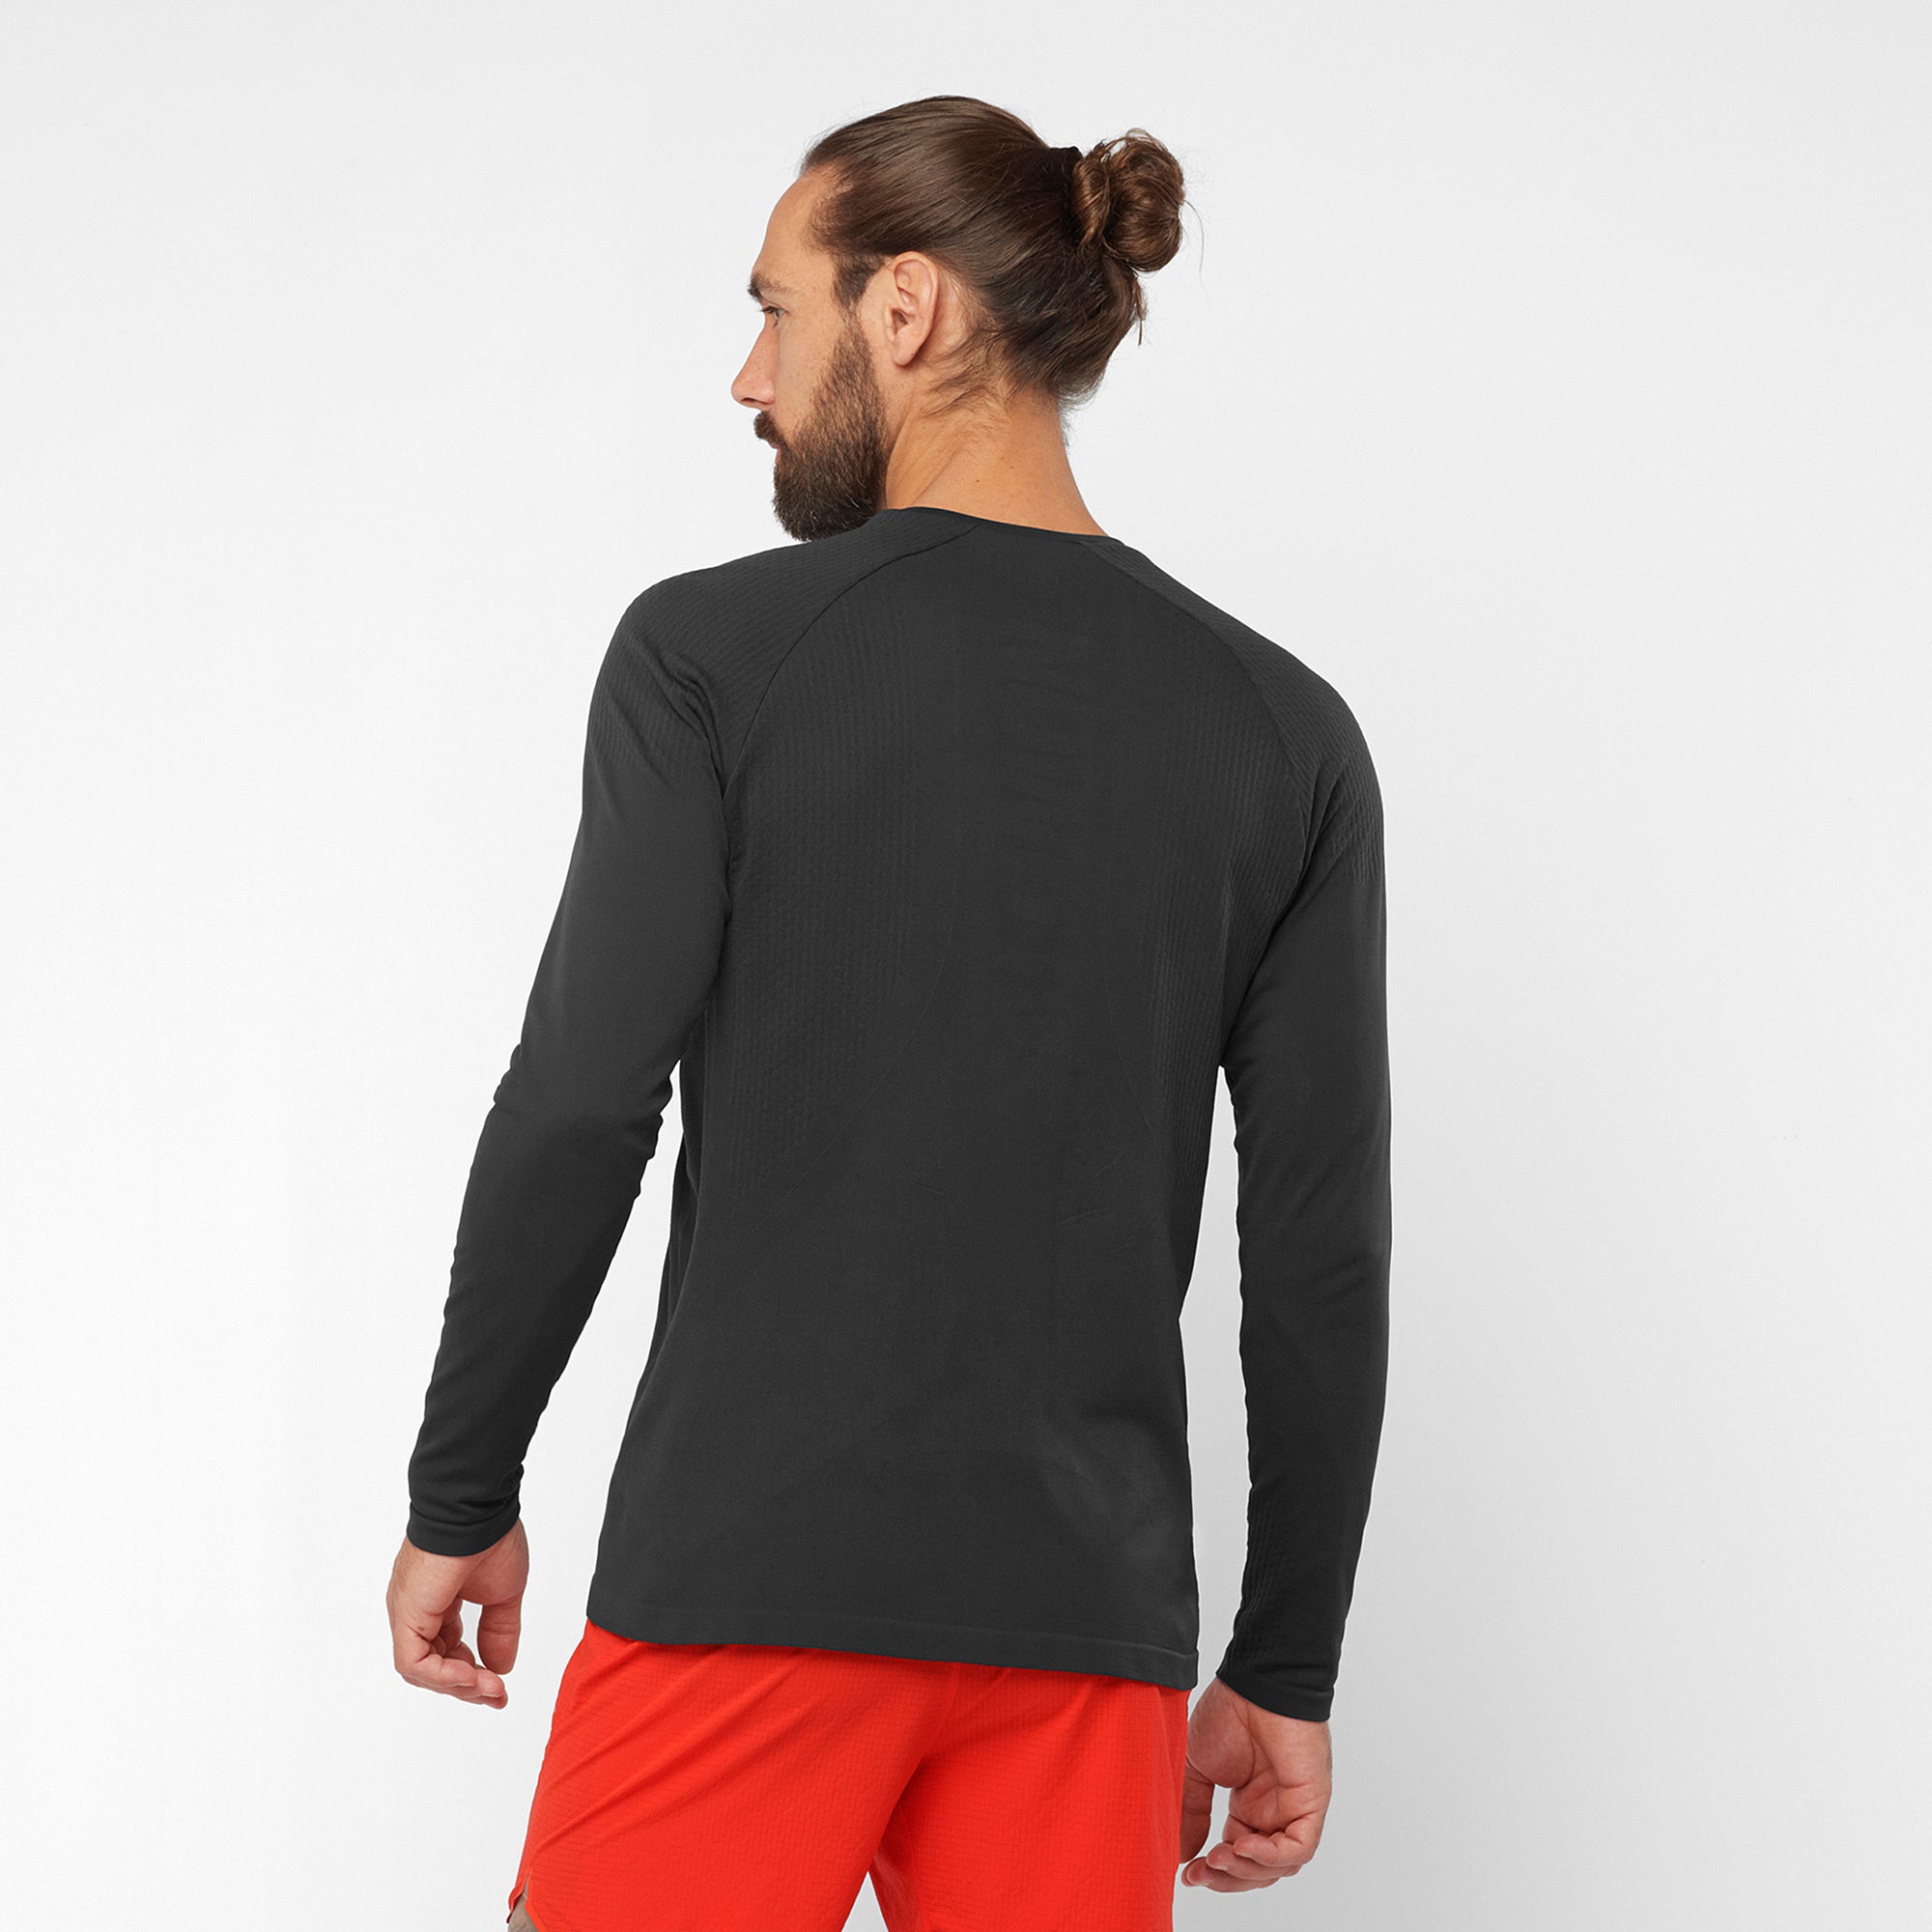 Man compression T-Shirt long sleeve Skins Bio A200 Black 